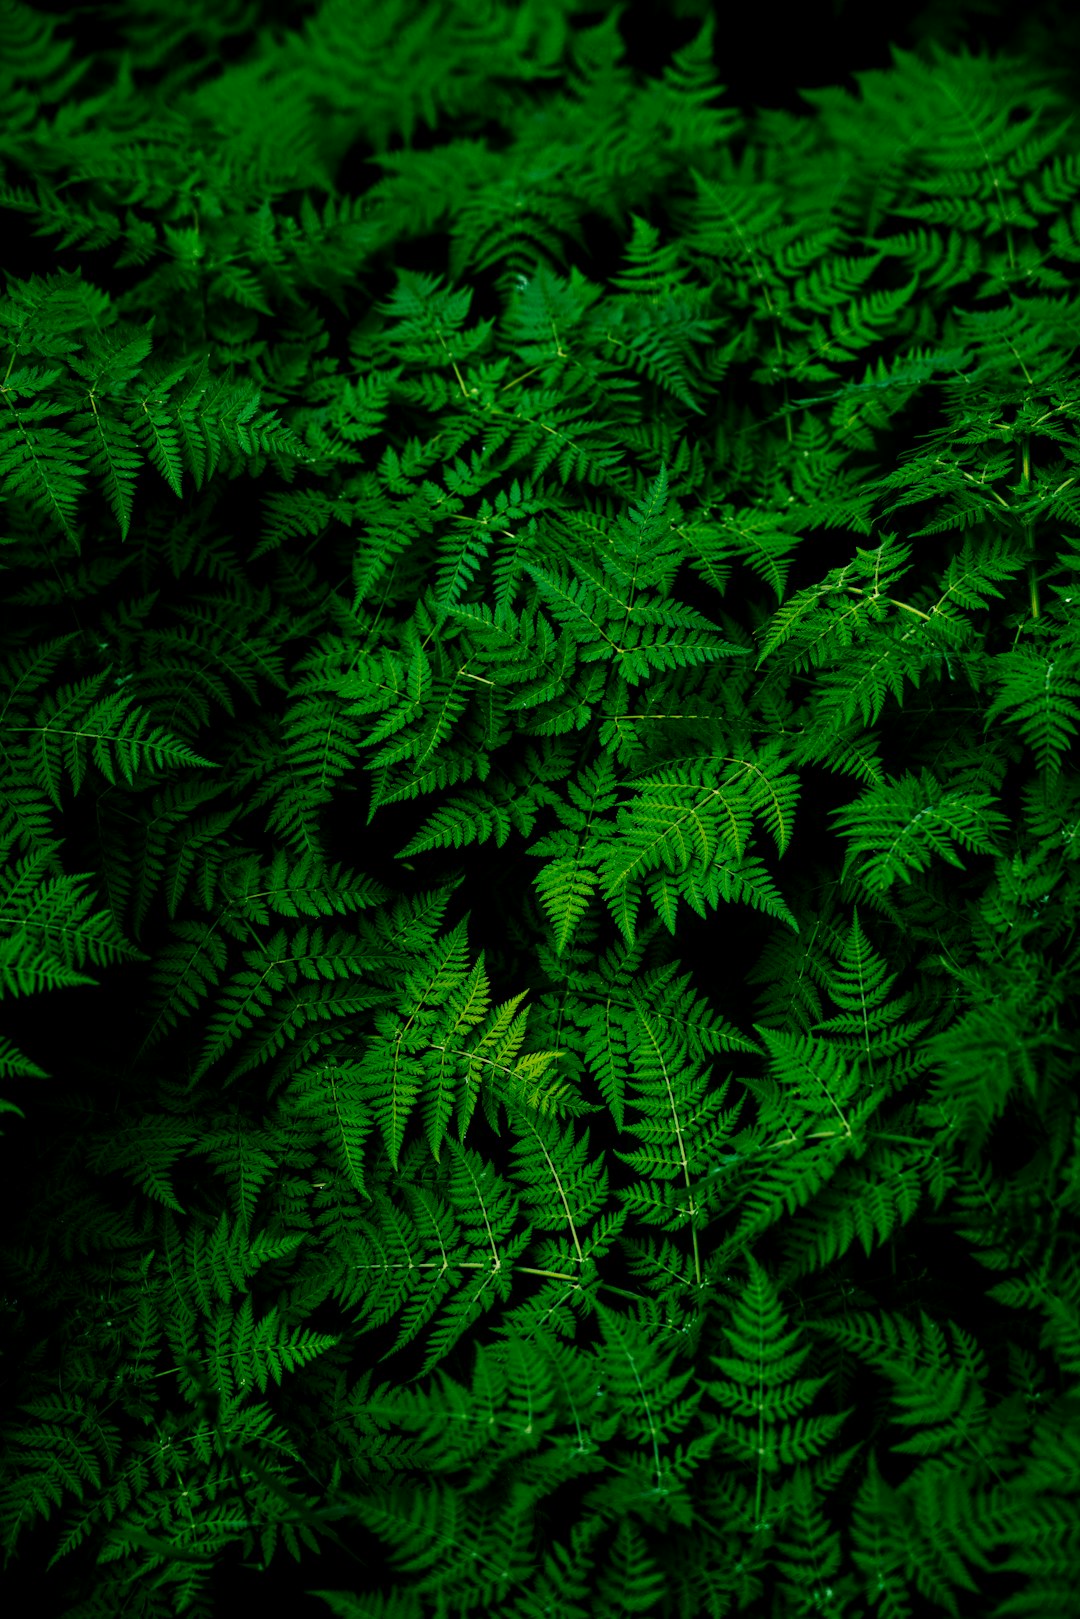 ebony fertilizer, ebony plant, photo of green fern plant